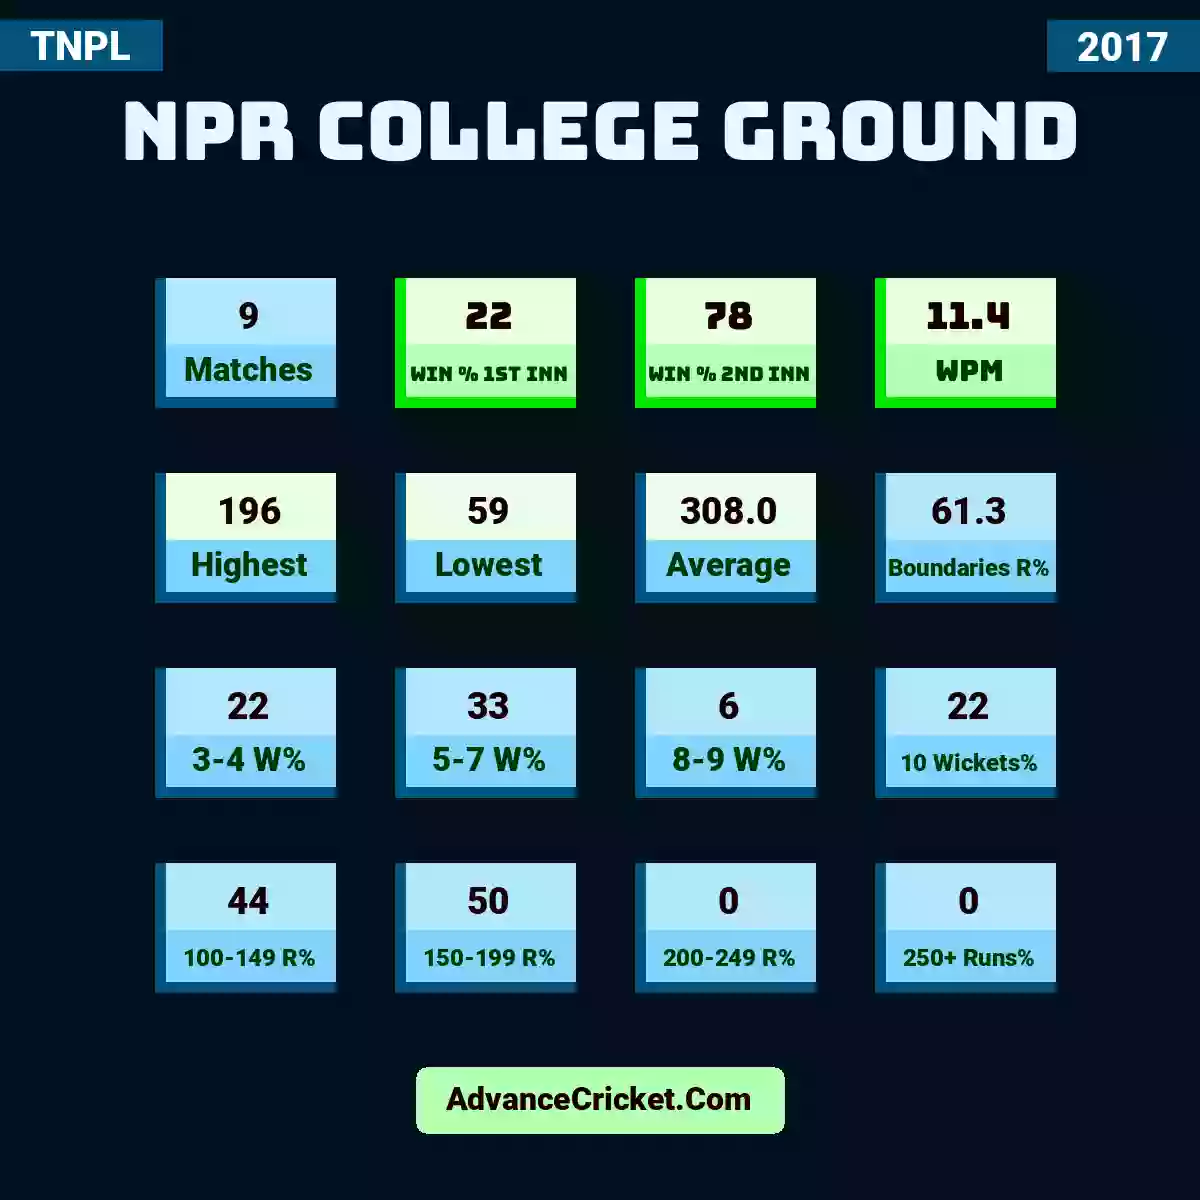 Image showing NPR College Ground with Matches: 9, Win % 1st Inn: 22, Win % 2nd Inn: 78, WPM: 11.4, Highest: 196, Lowest: 59, Average: 308.0, Boundaries R%: 61.3, 3-4 W%: 22, 5-7 W%: 33, 8-9 W%: 6, 10 Wickets%: 22, 100-149 R%: 44, 150-199 R%: 50, 200-249 R%: 0, 250+ Runs%: 0.